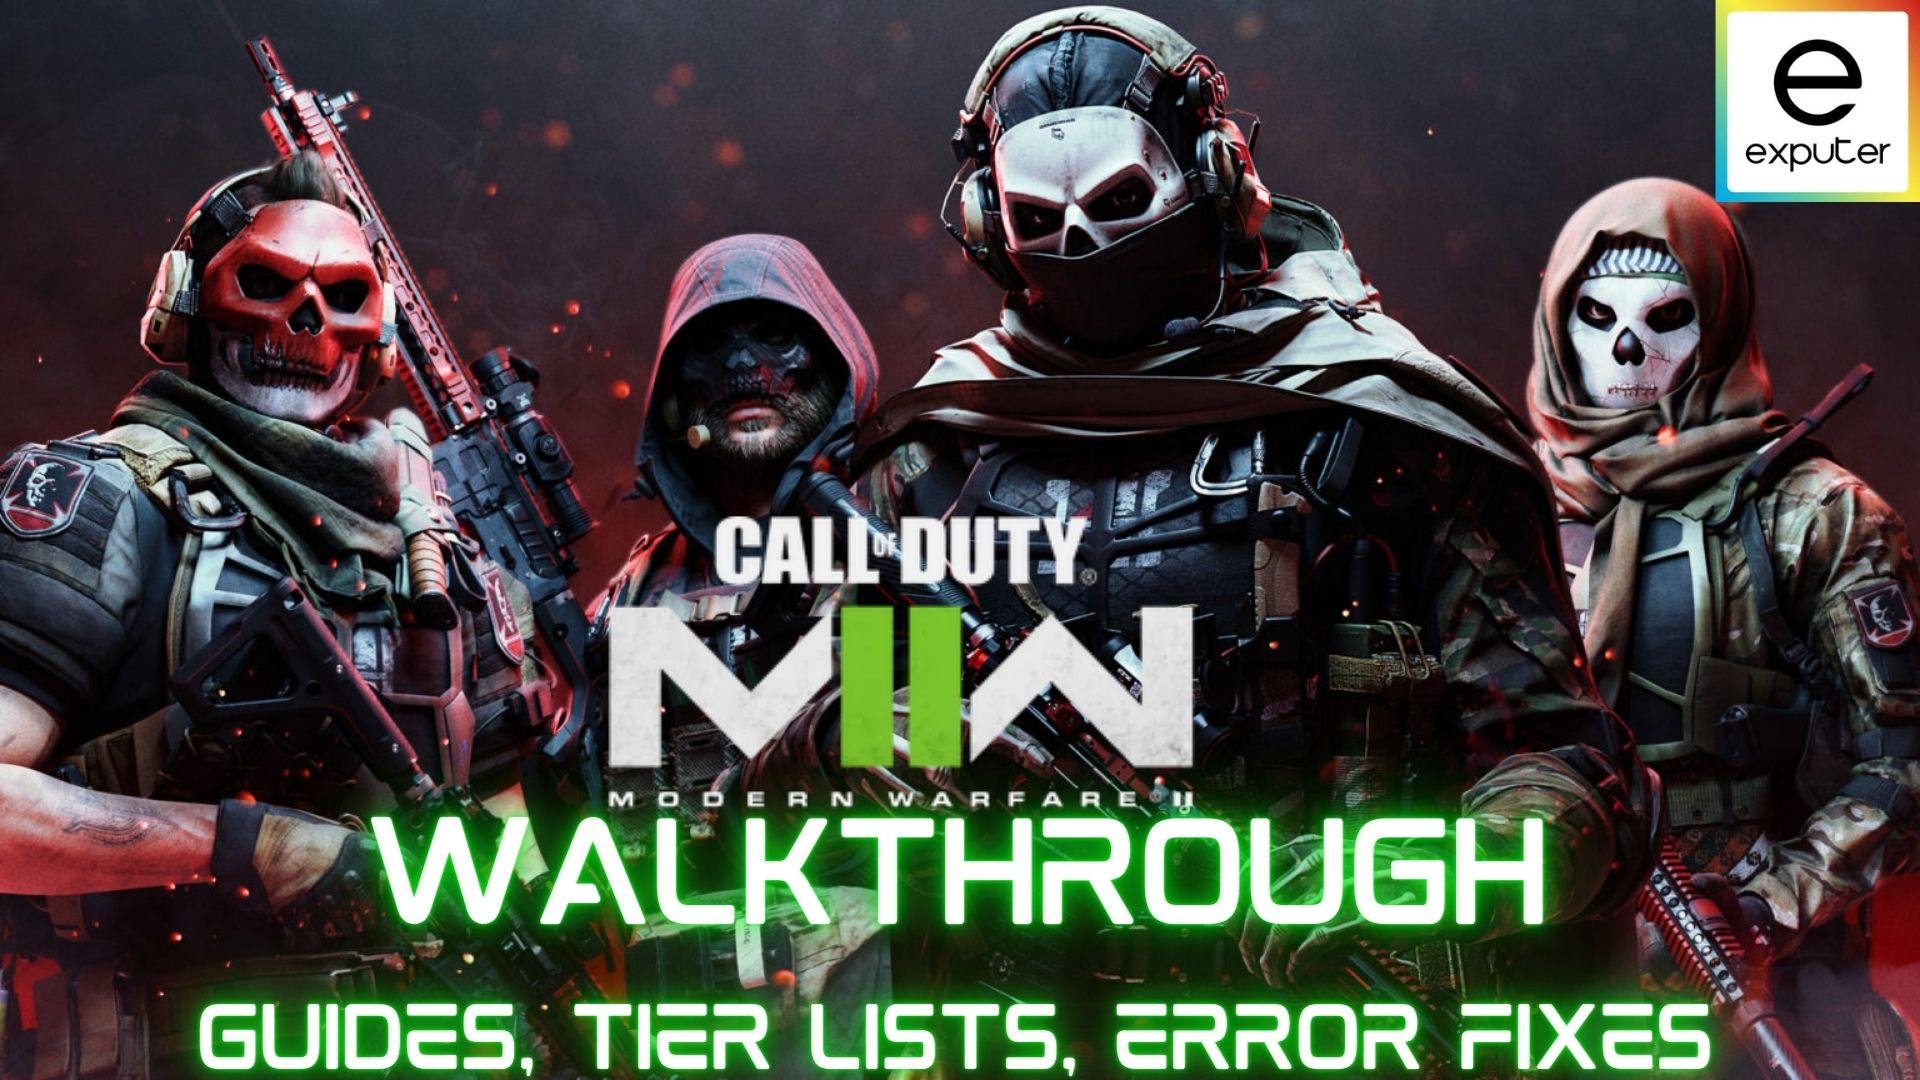 Walkthrough - Call of Duty: Modern Warfare 2 Guide - IGN